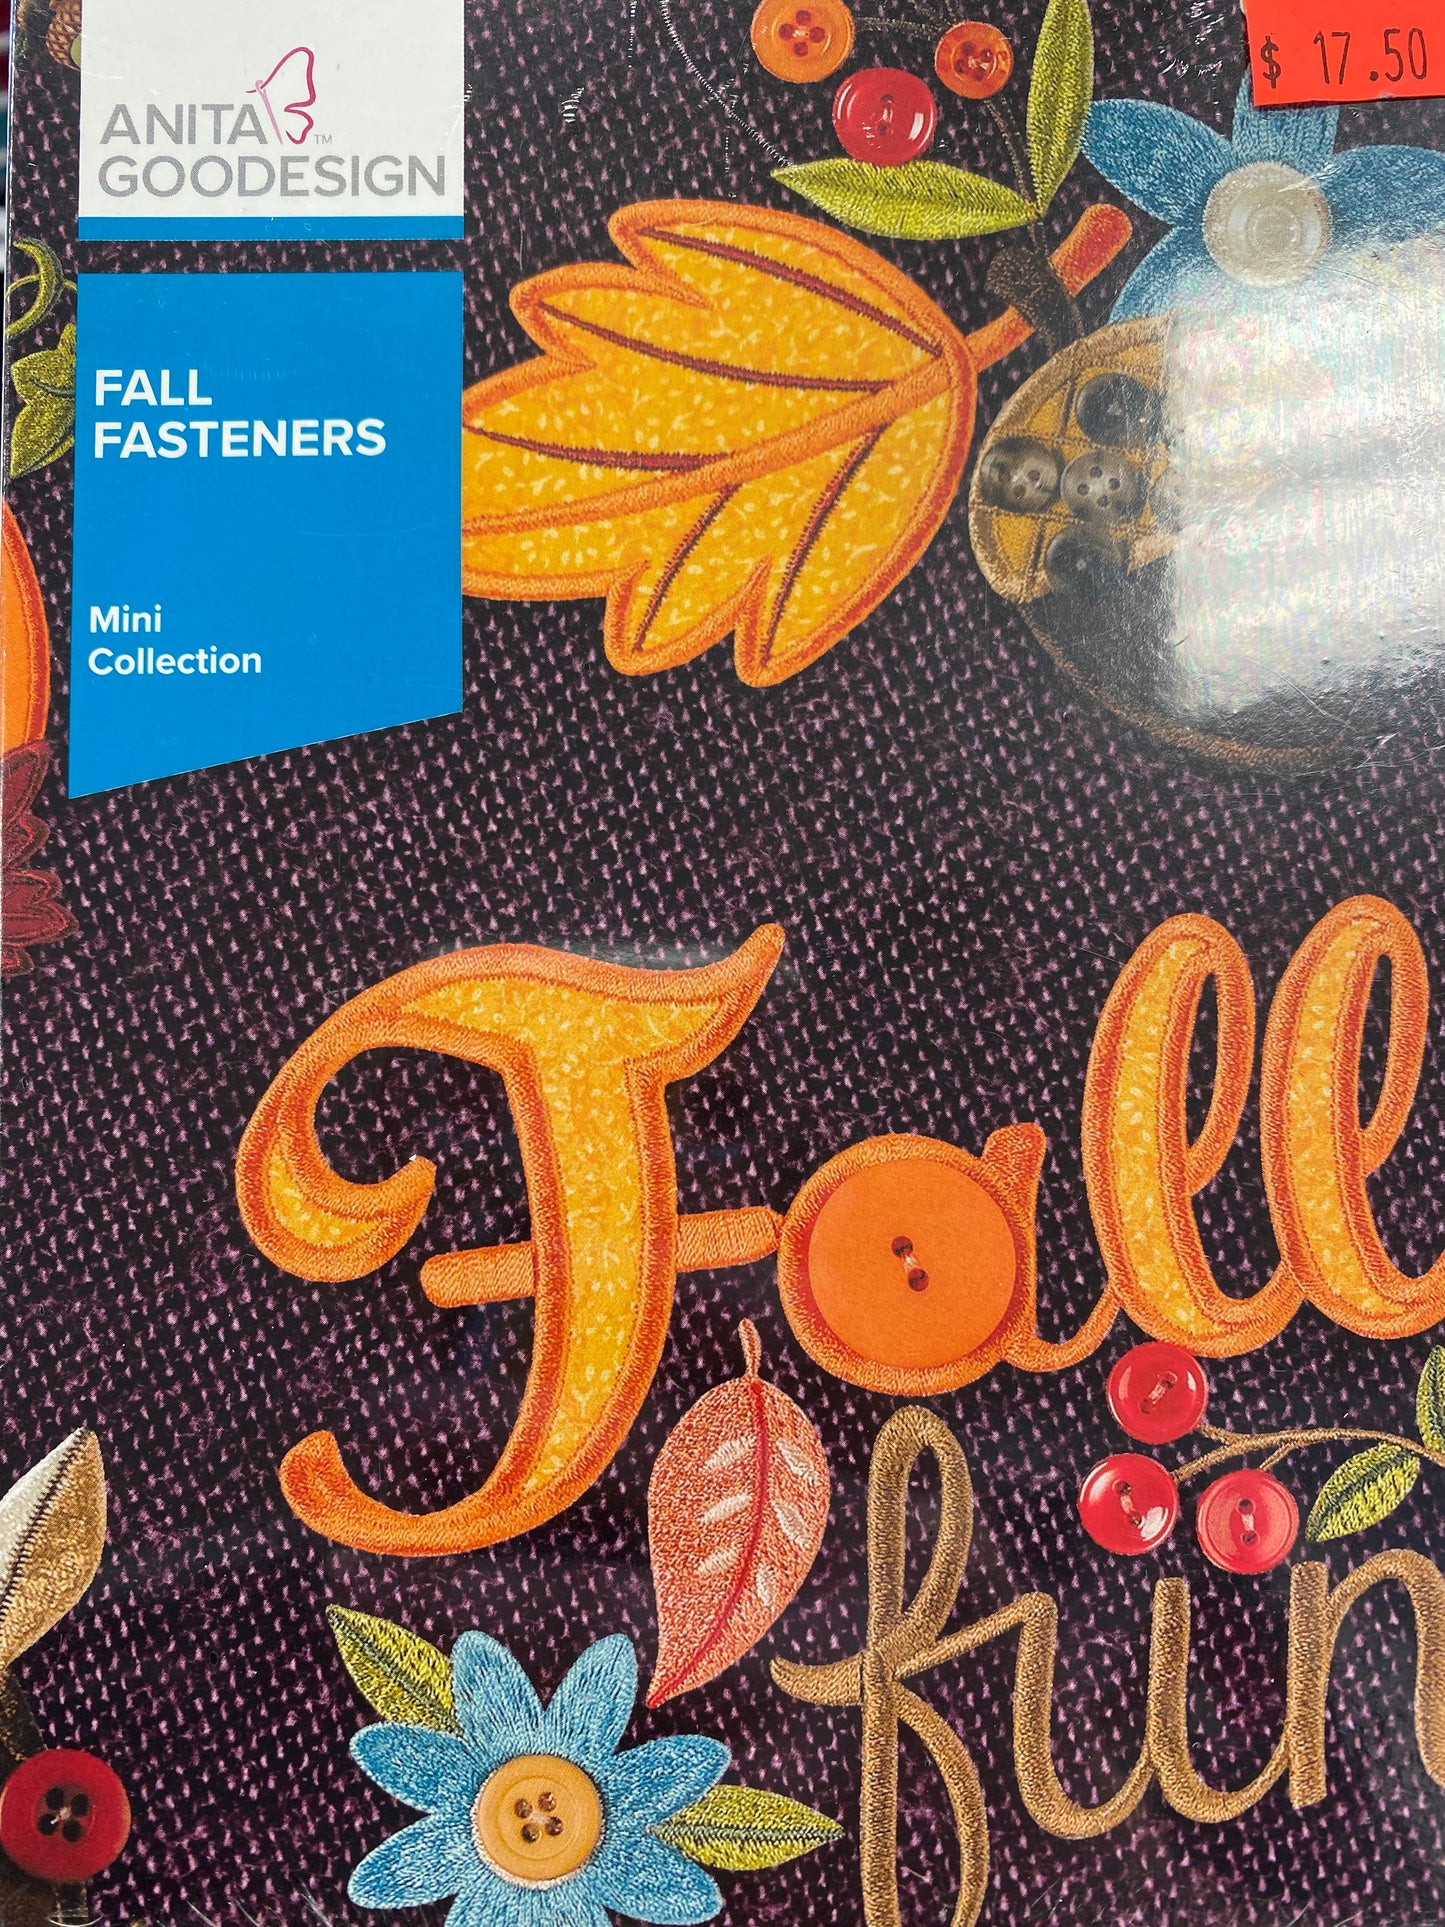 Fall Fasteners by Anita Goodesign